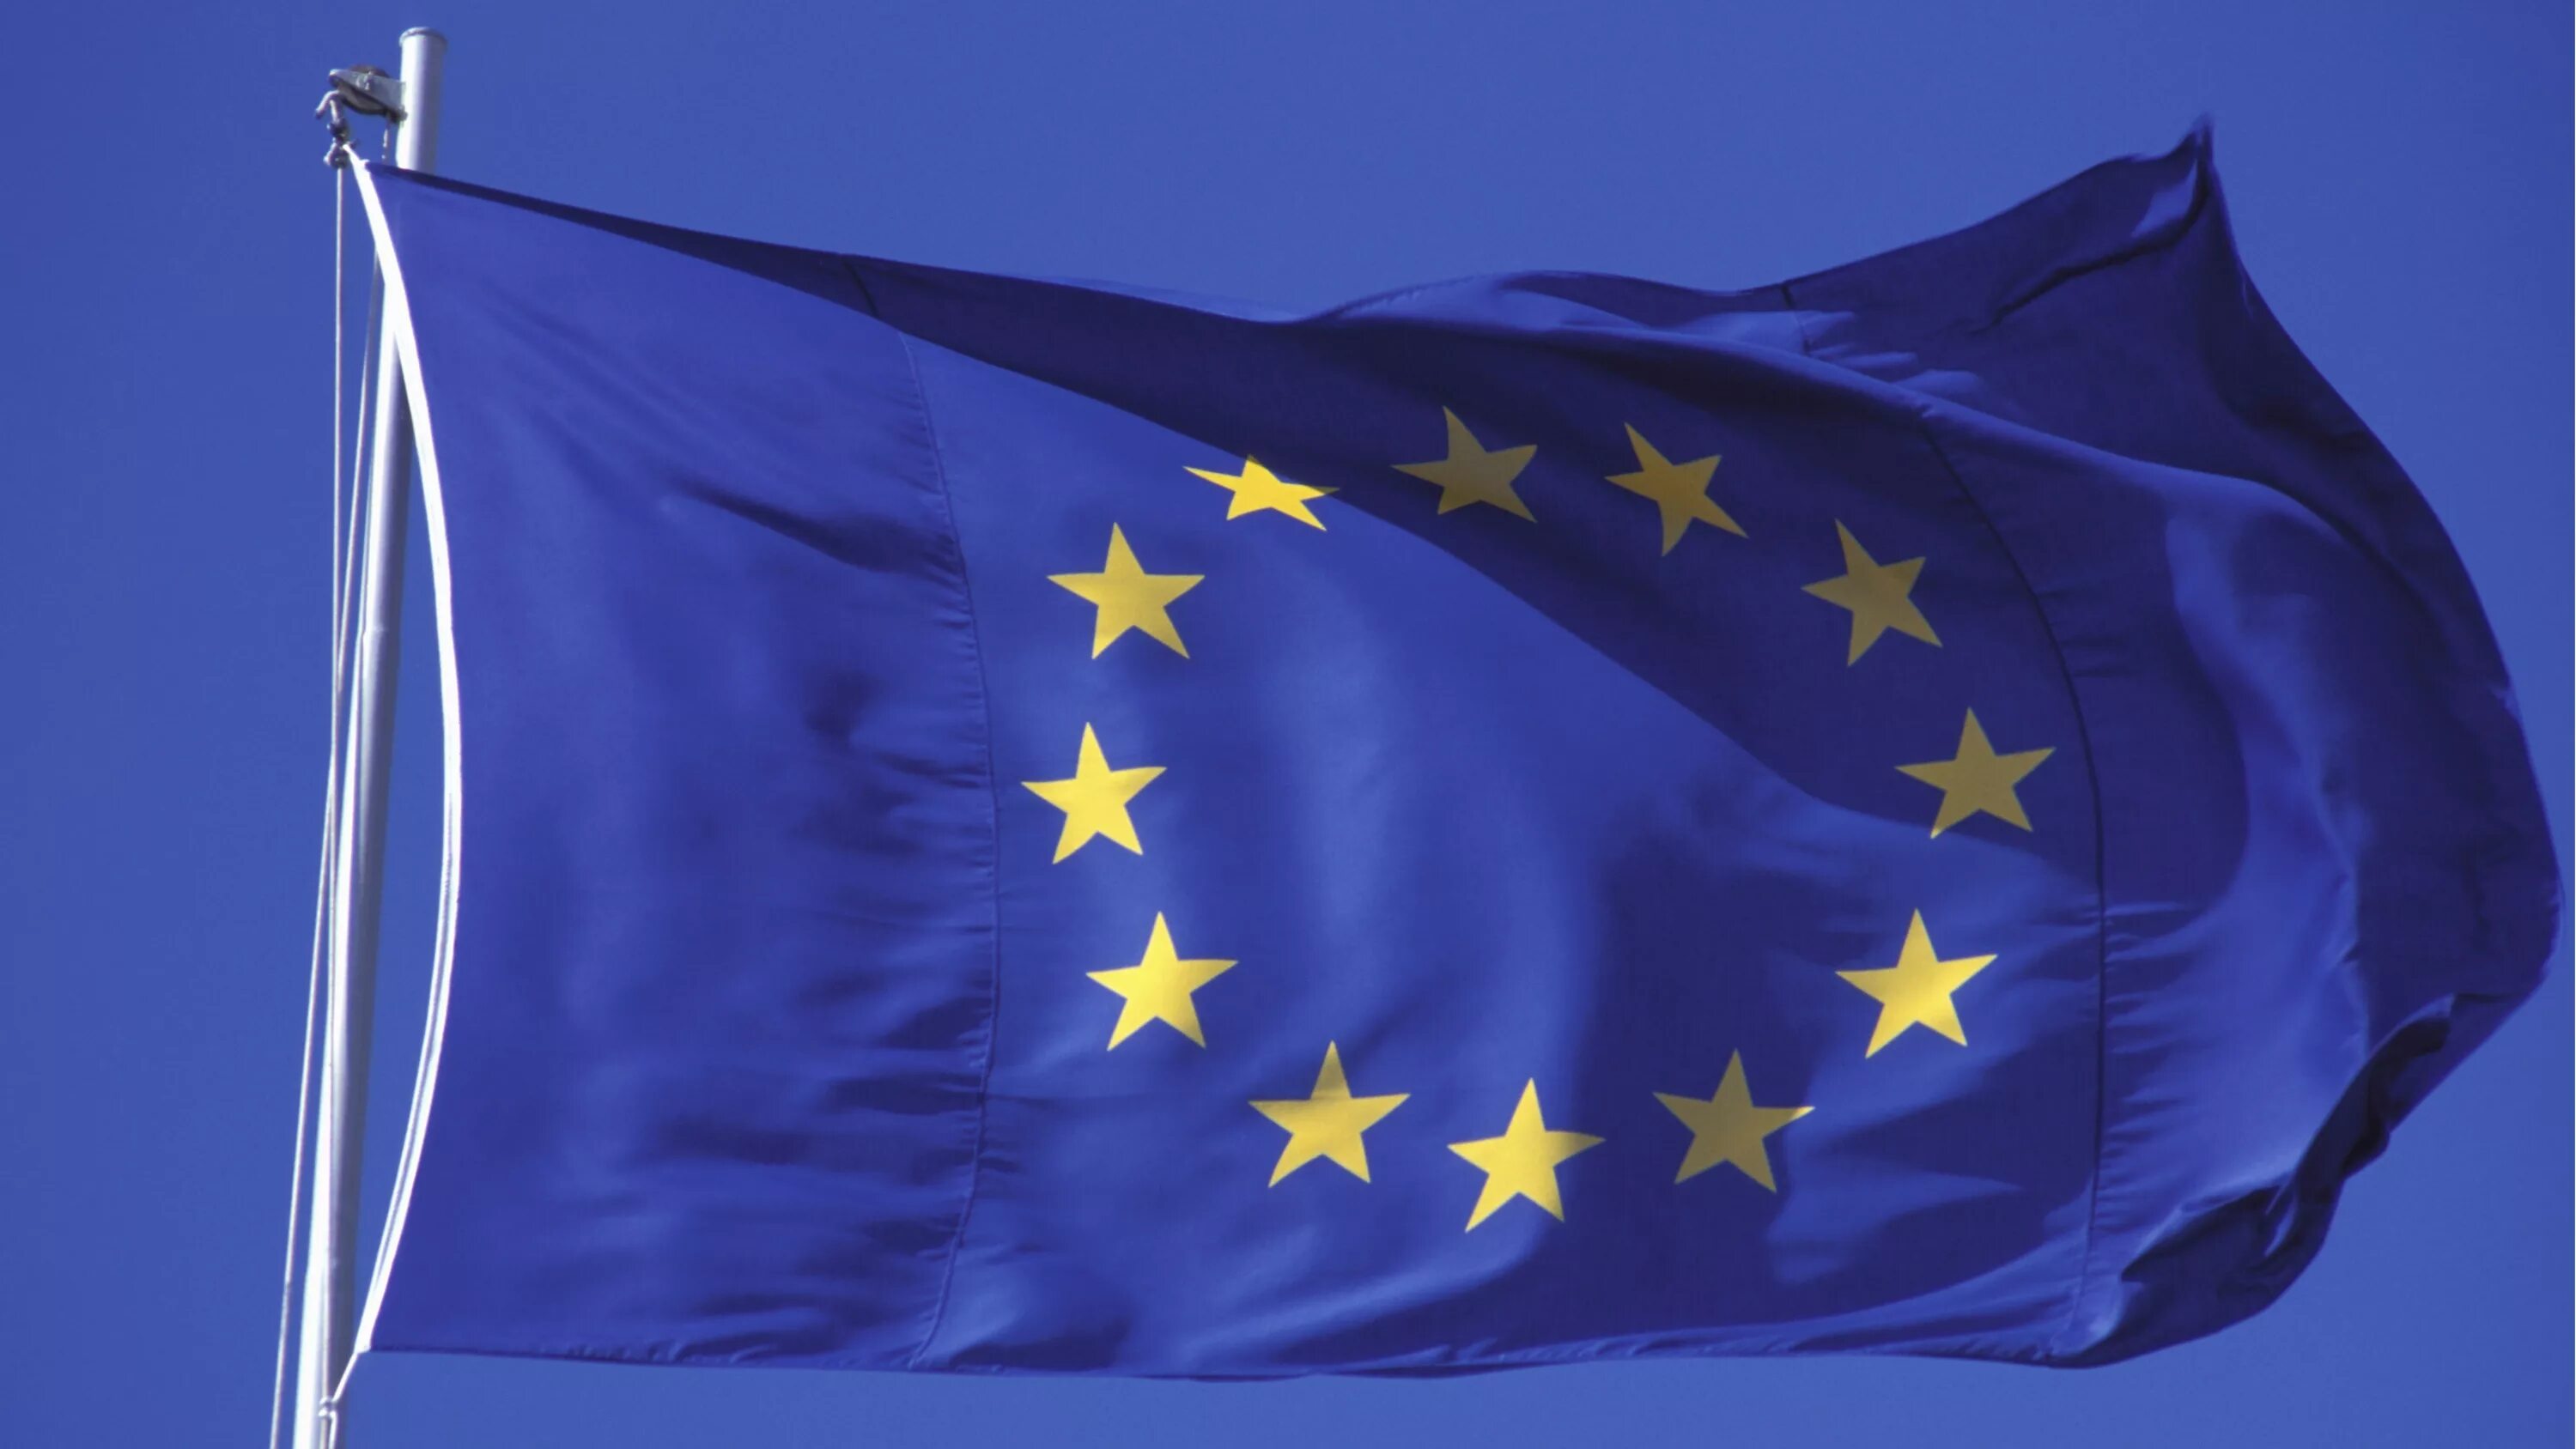 Флаг ЕС И Туркменистан. Евросоюза Ляйн. Франция и Евросоюз. Развивающийся флаг ЕС. Армения вступит в ес